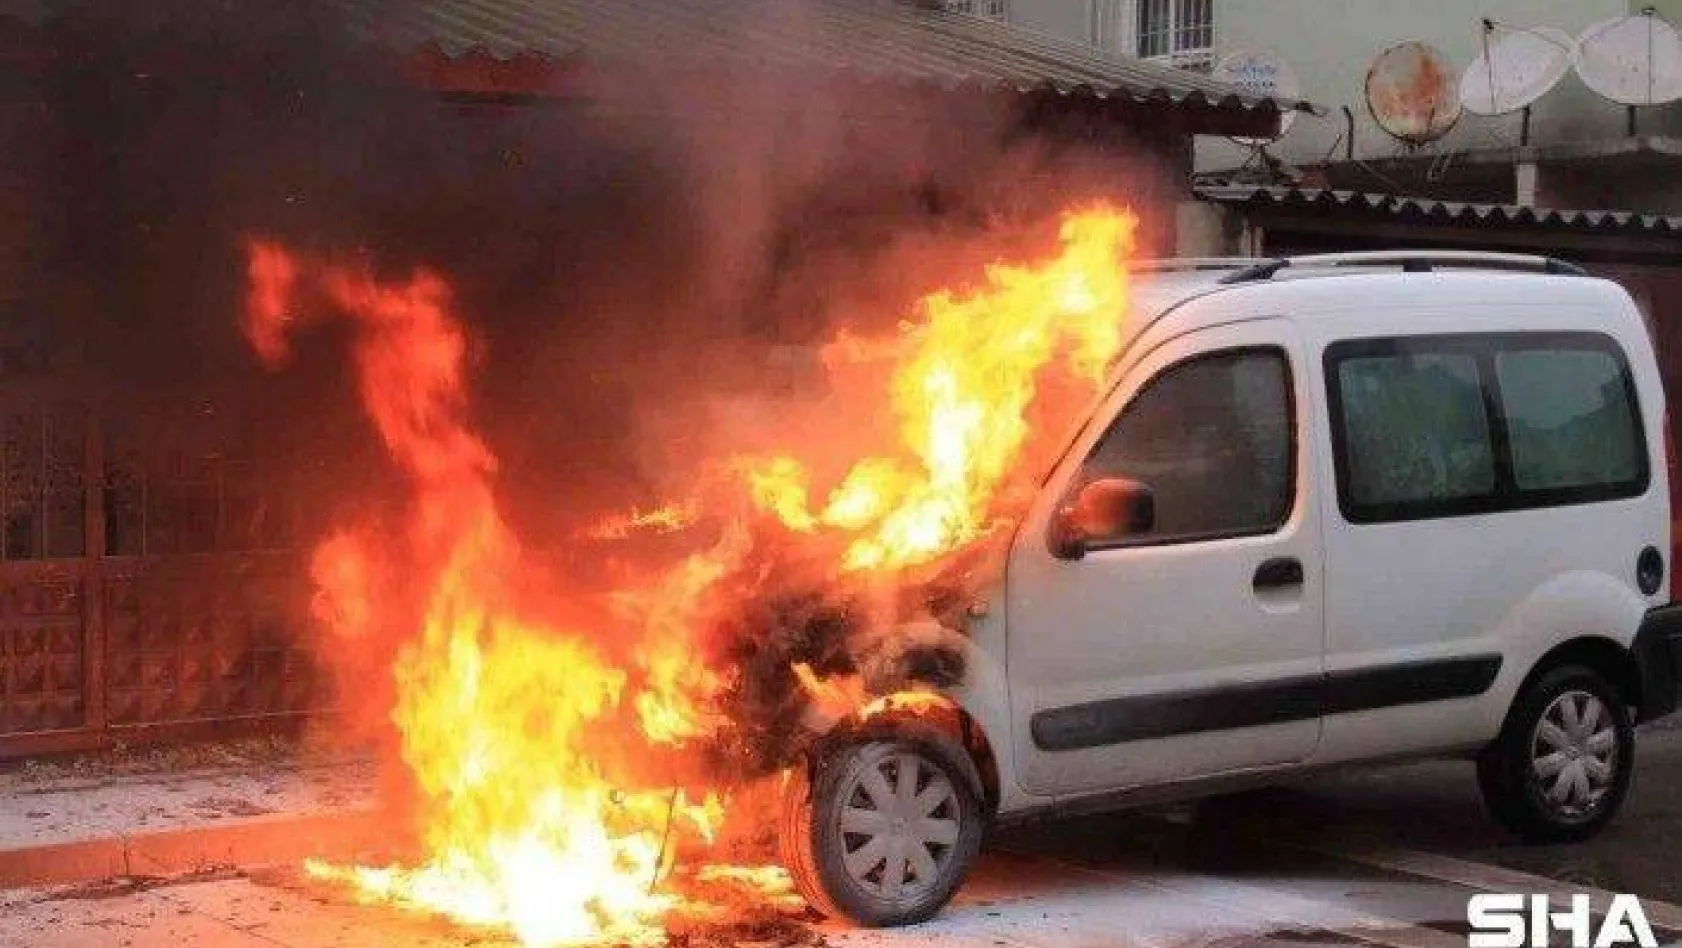 Kartal'da seyir halinde olan otomobil alev alev yandı